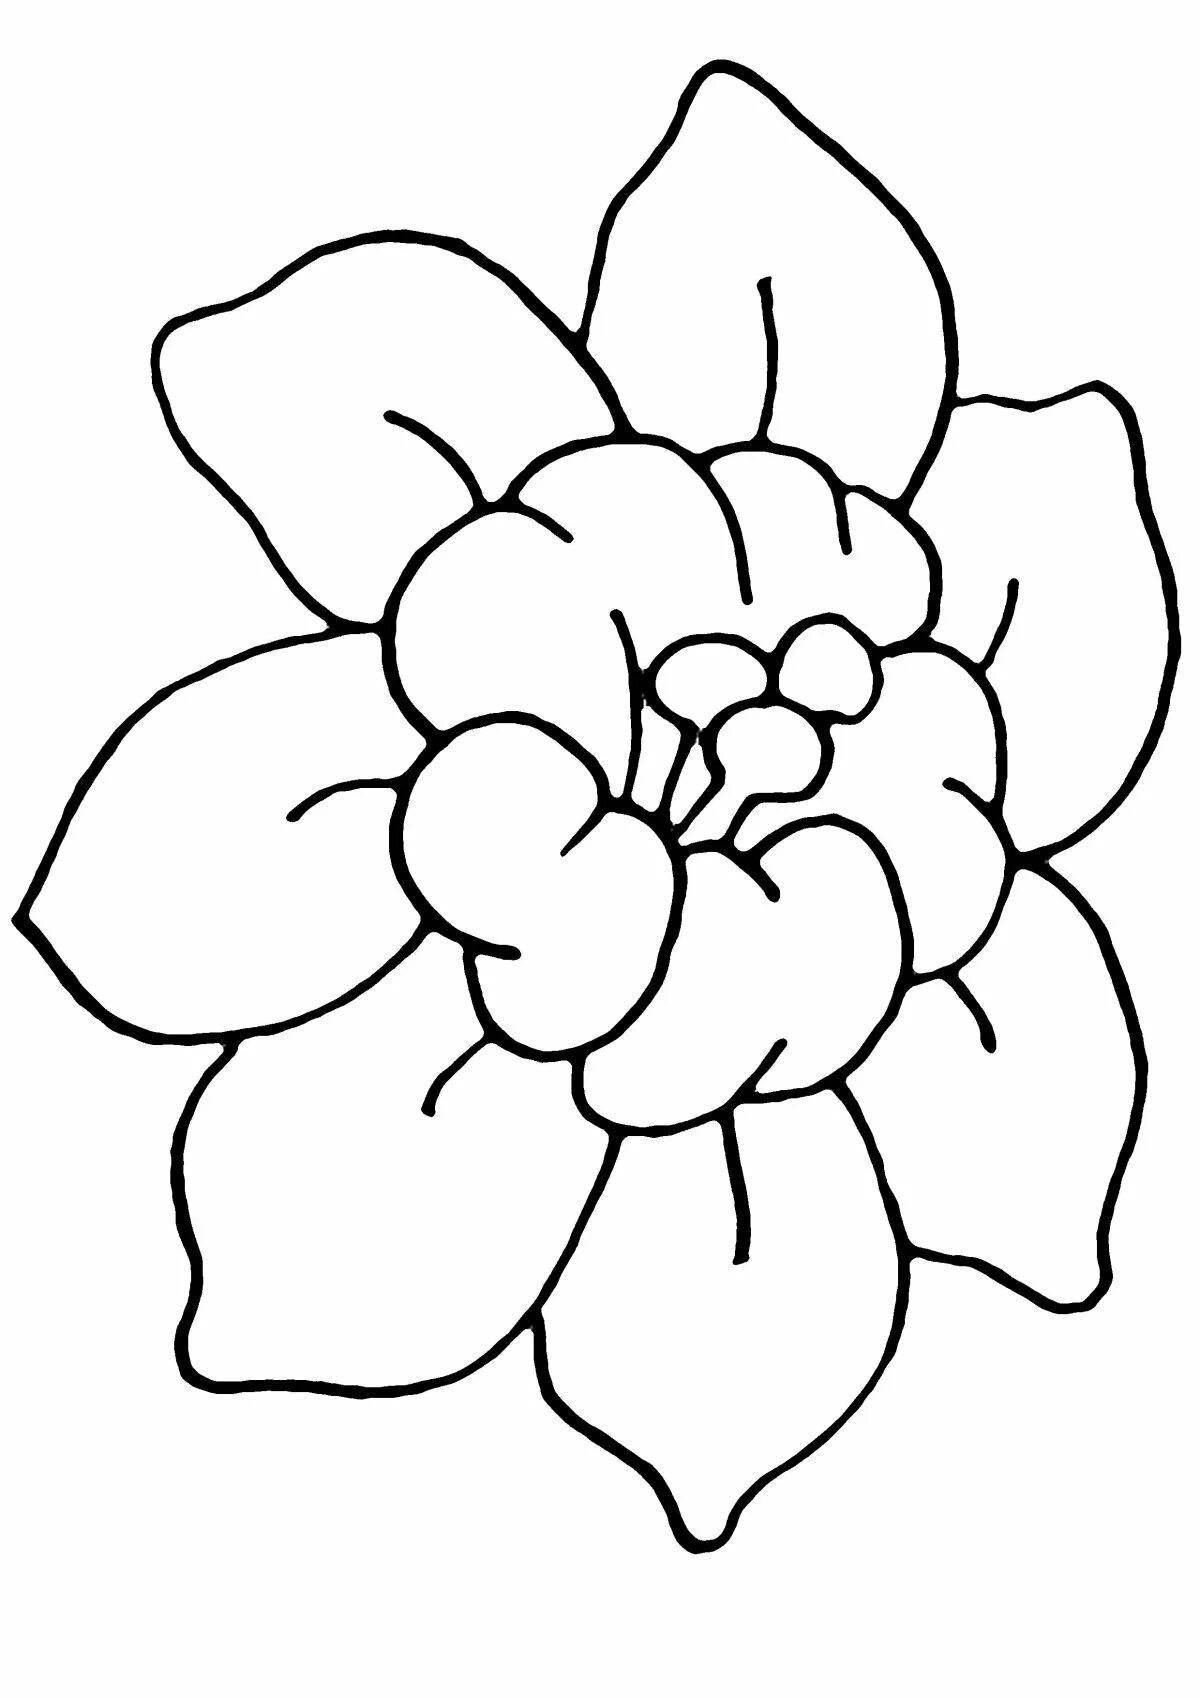 Великолепная раскраска цветок семицветик